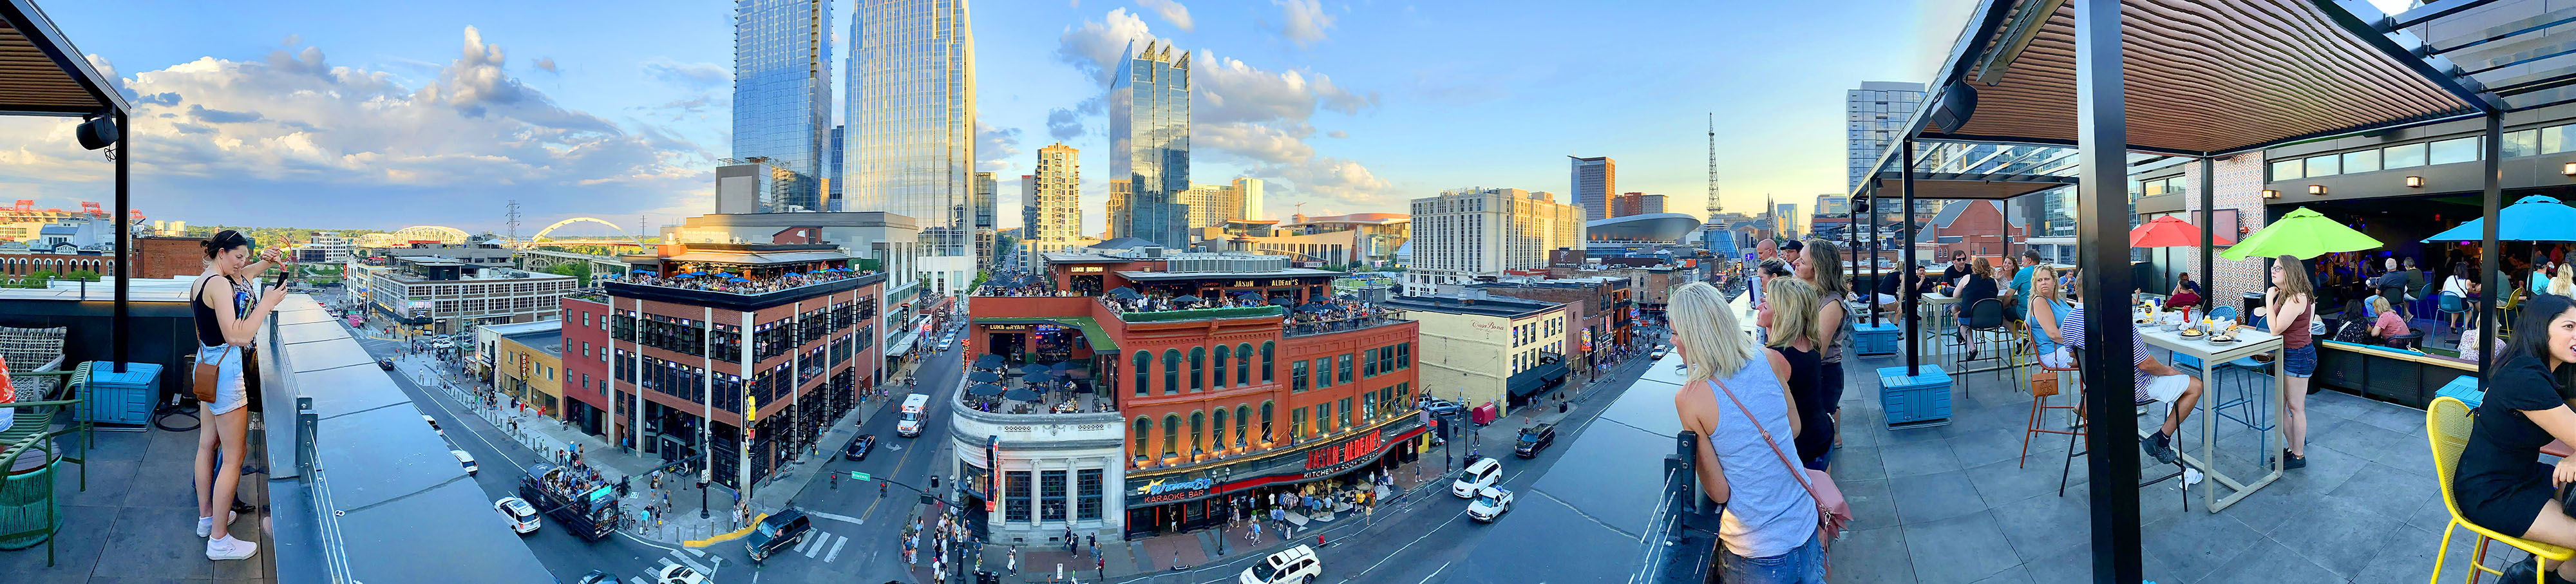 The setting sun illuminates rooftop bars along Broadway’s ‘Music Row’ in downtown Nashville. Photo by David Tulis.